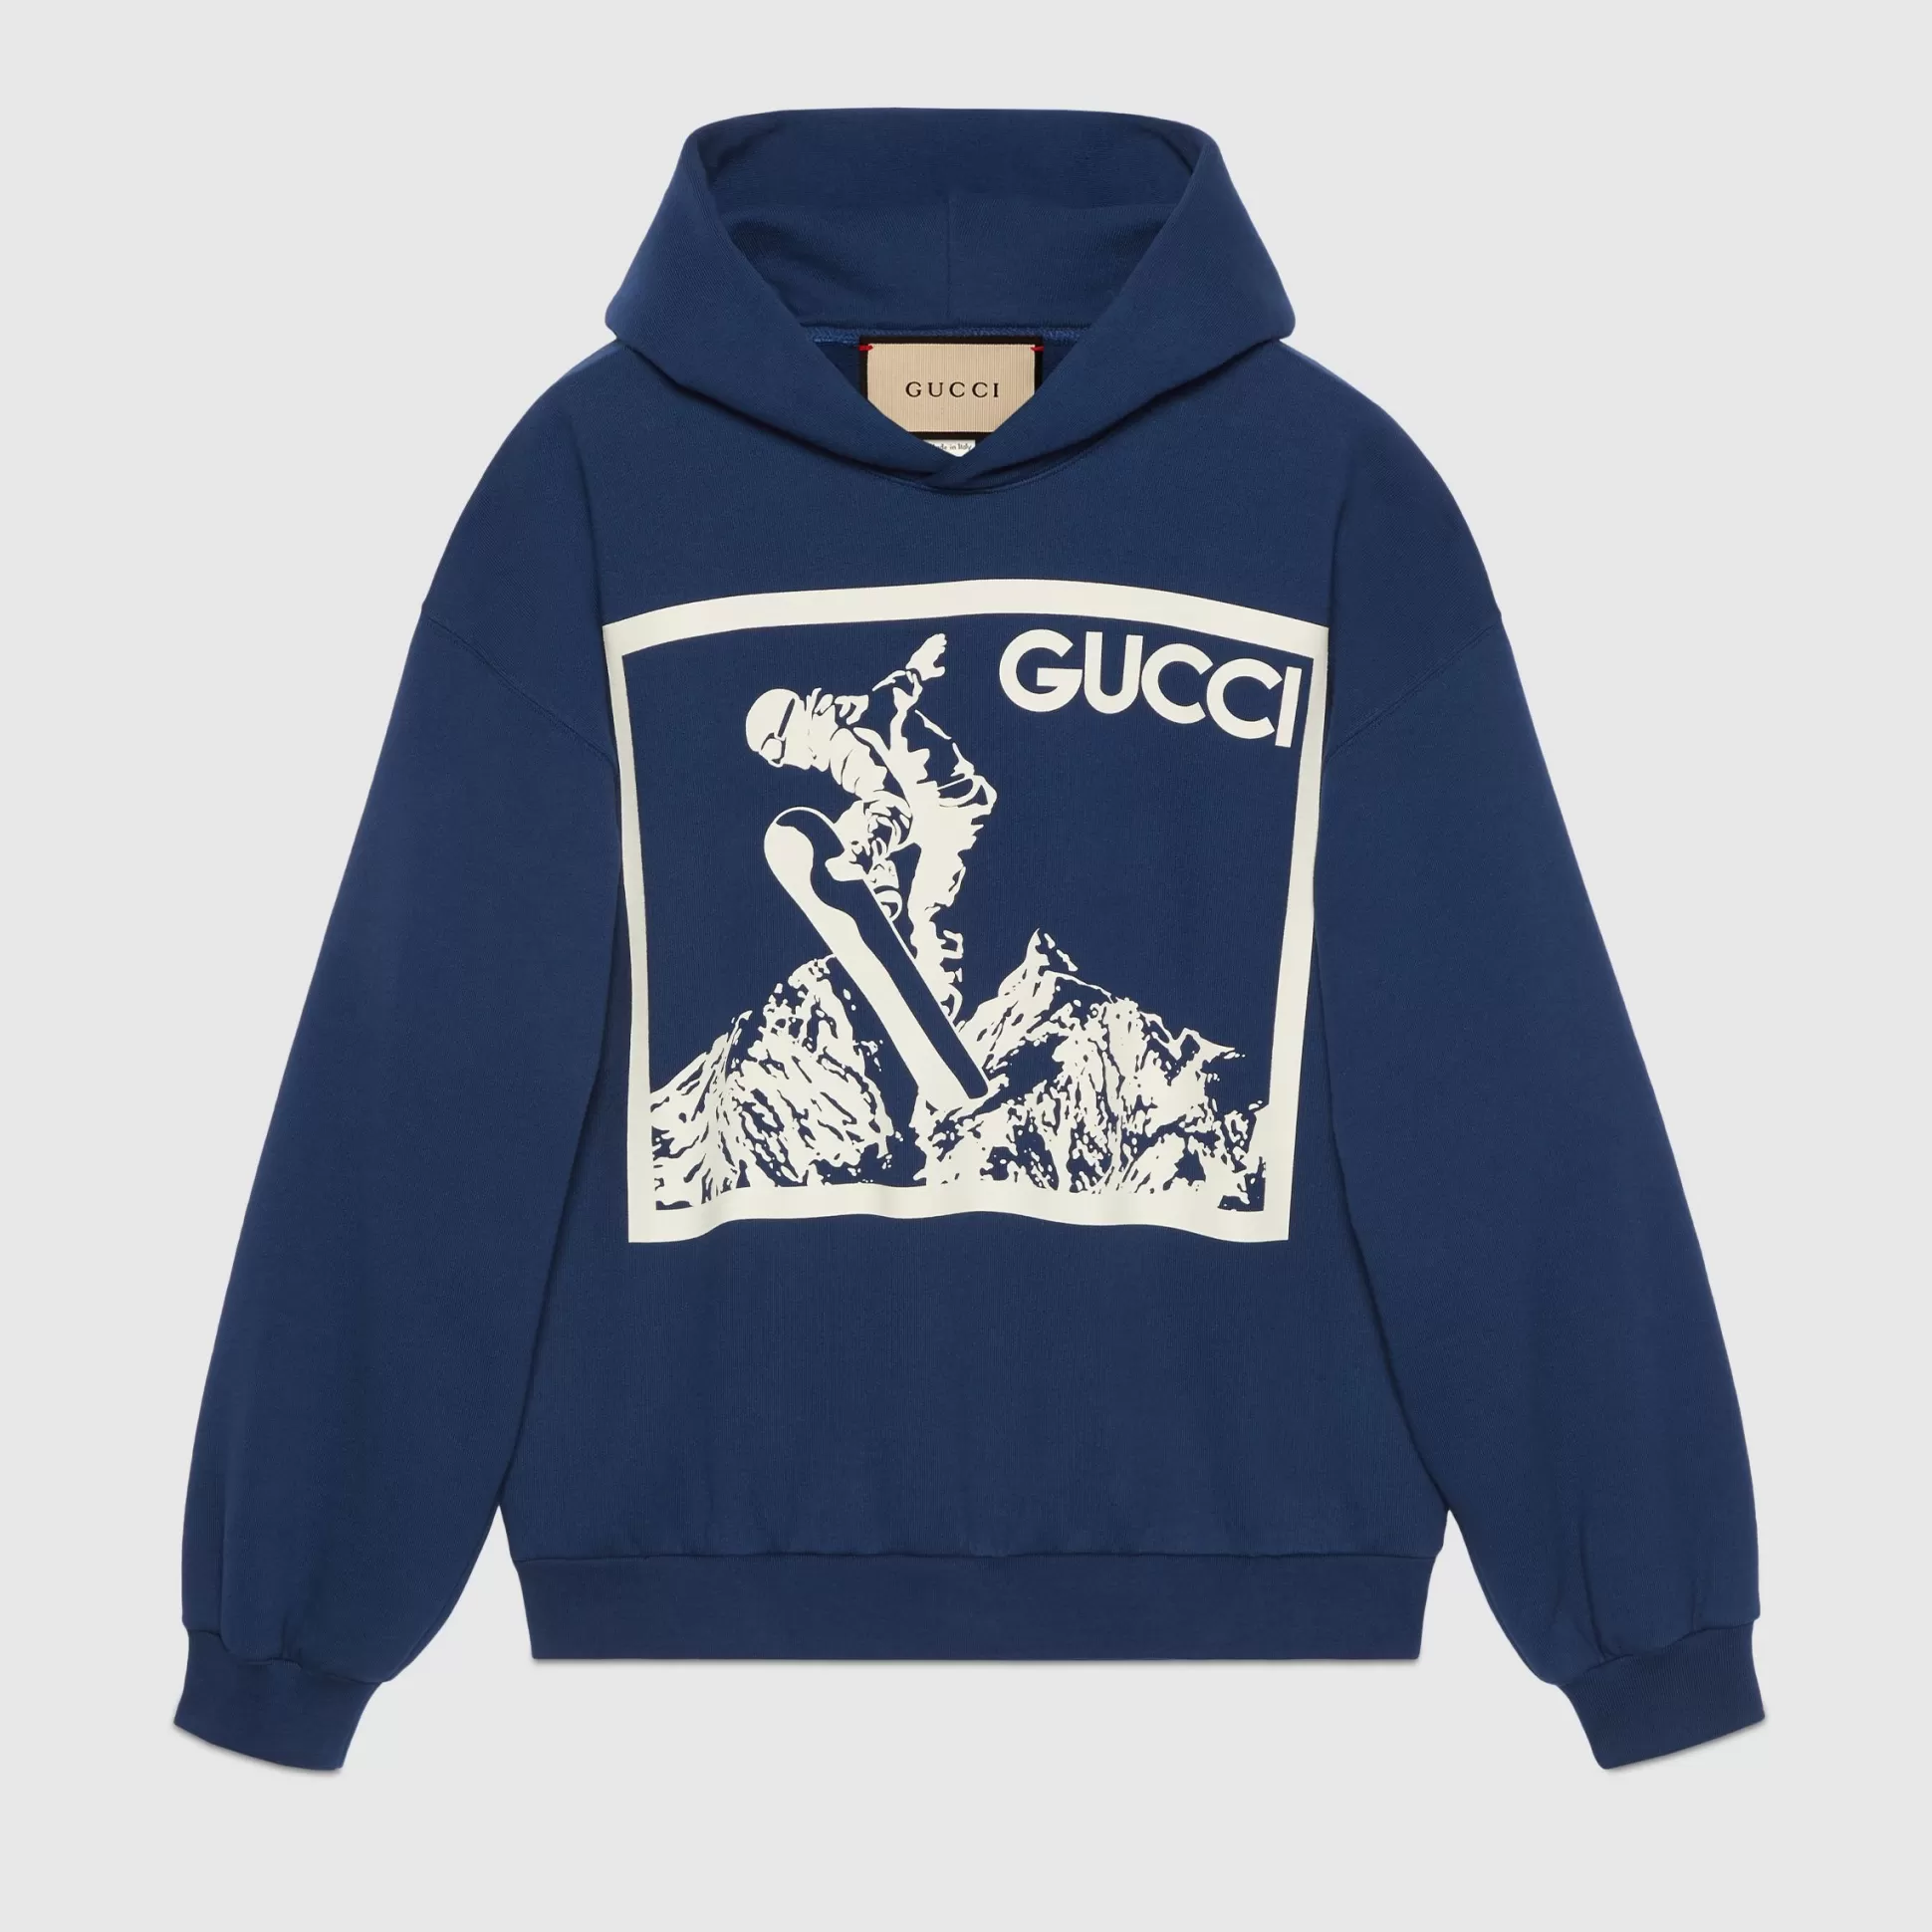 GUCCI Cotton Jersey Hooded Sweatshirt-Men Tracksuits & Sweatshirts